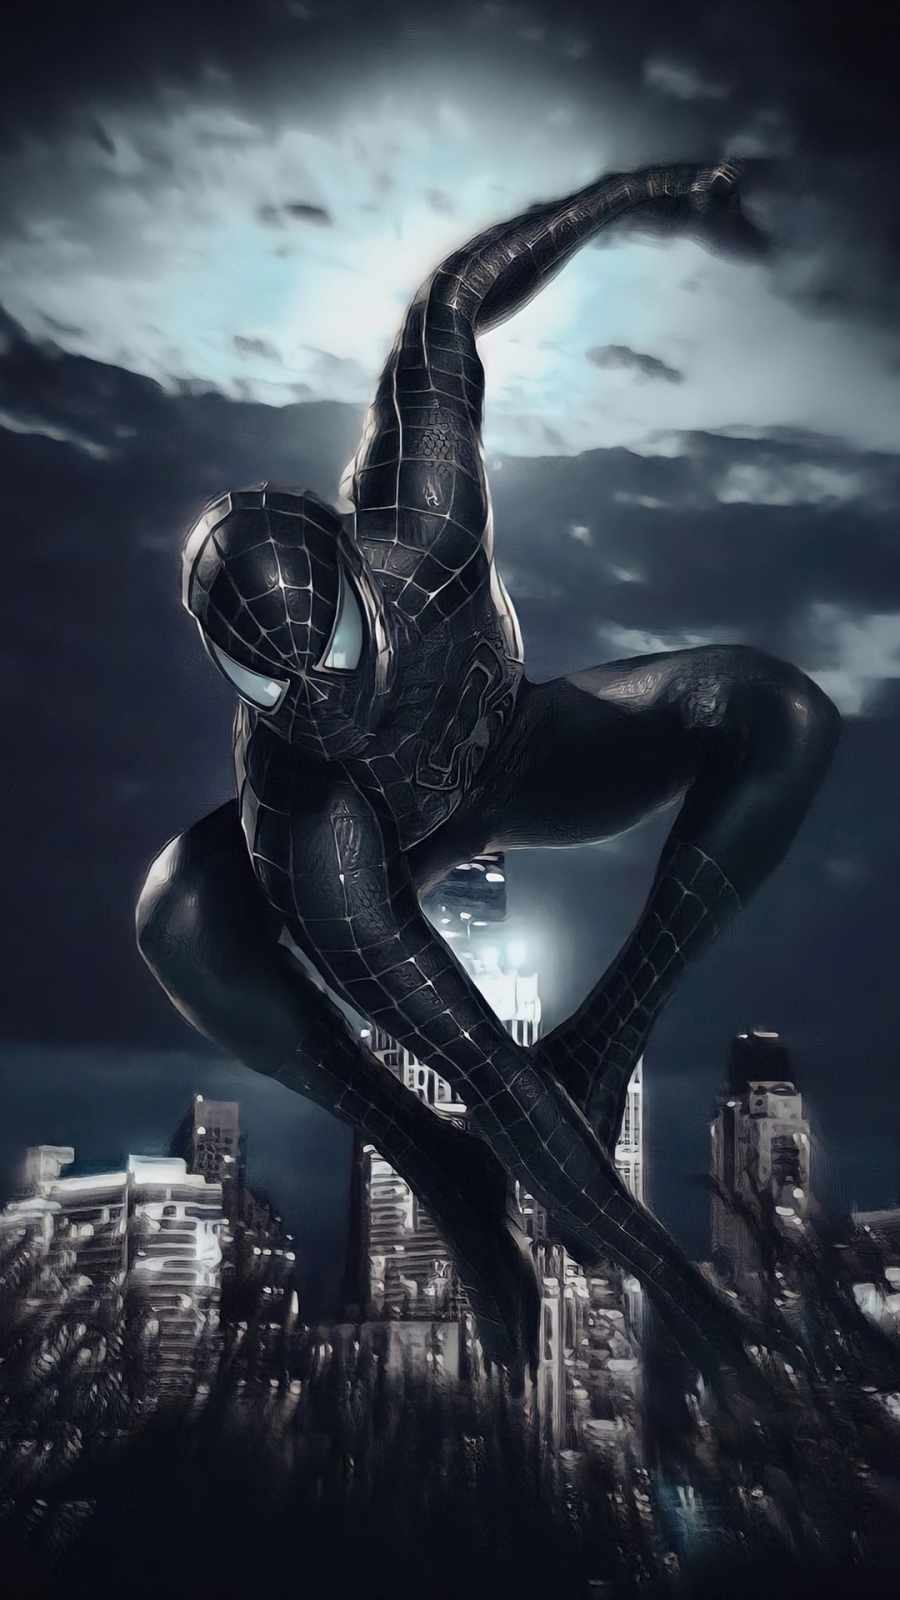 Black Suit Spiderman - IPhone Wallpapers : iPhone Wallpapers